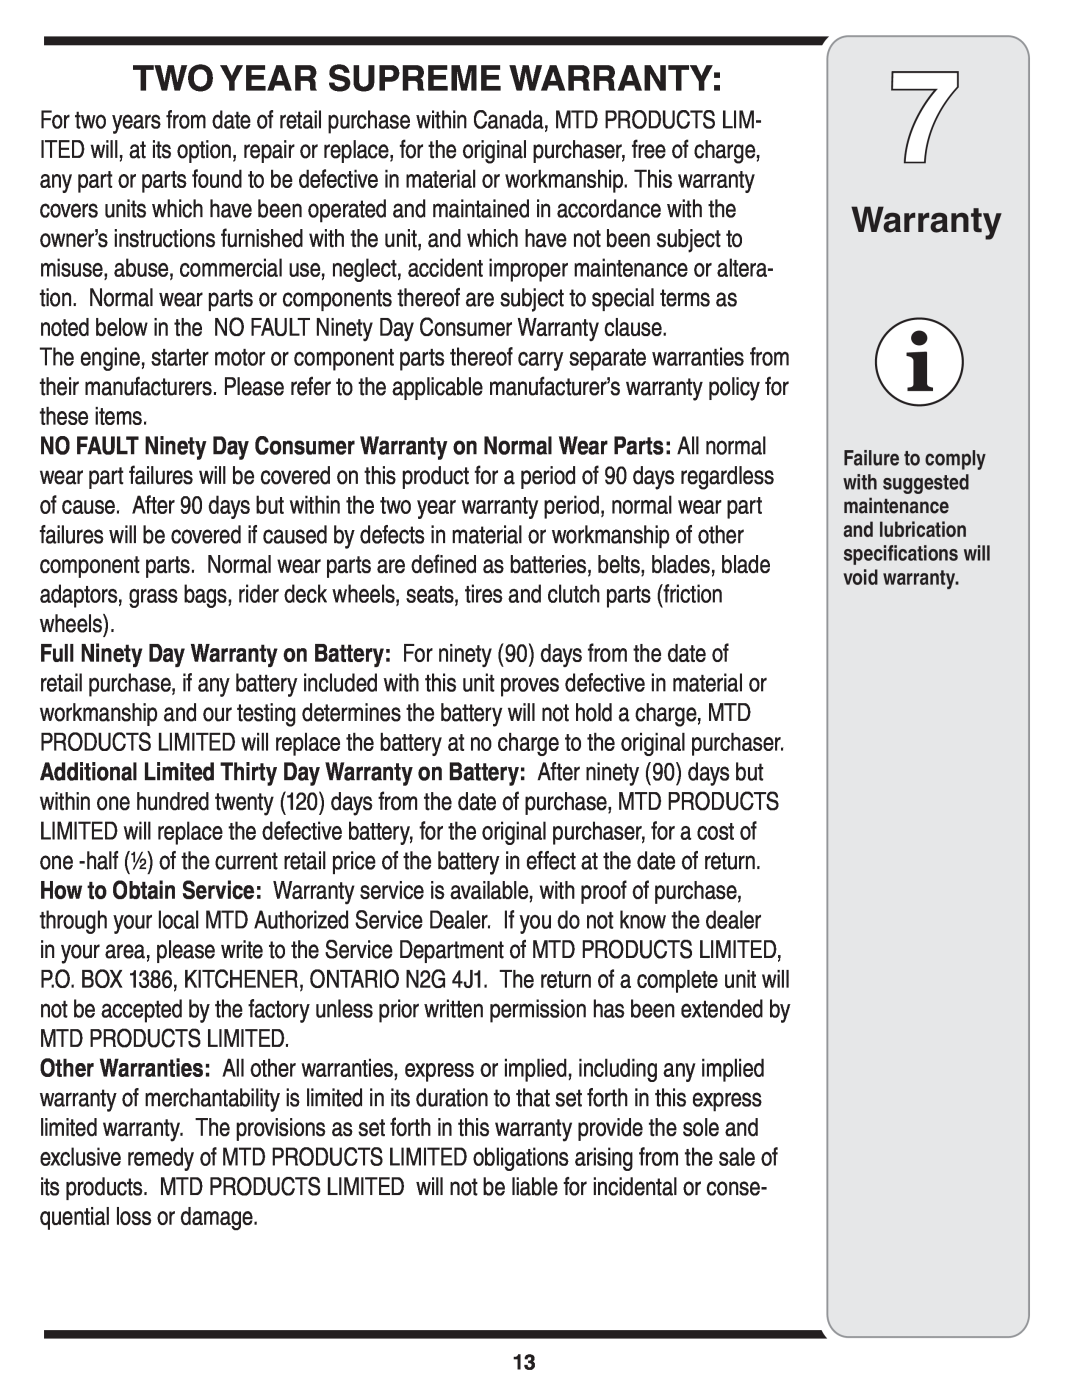 Troy-Bilt 100 warranty Two Year Supreme Warranty, Mtd Products Limited 